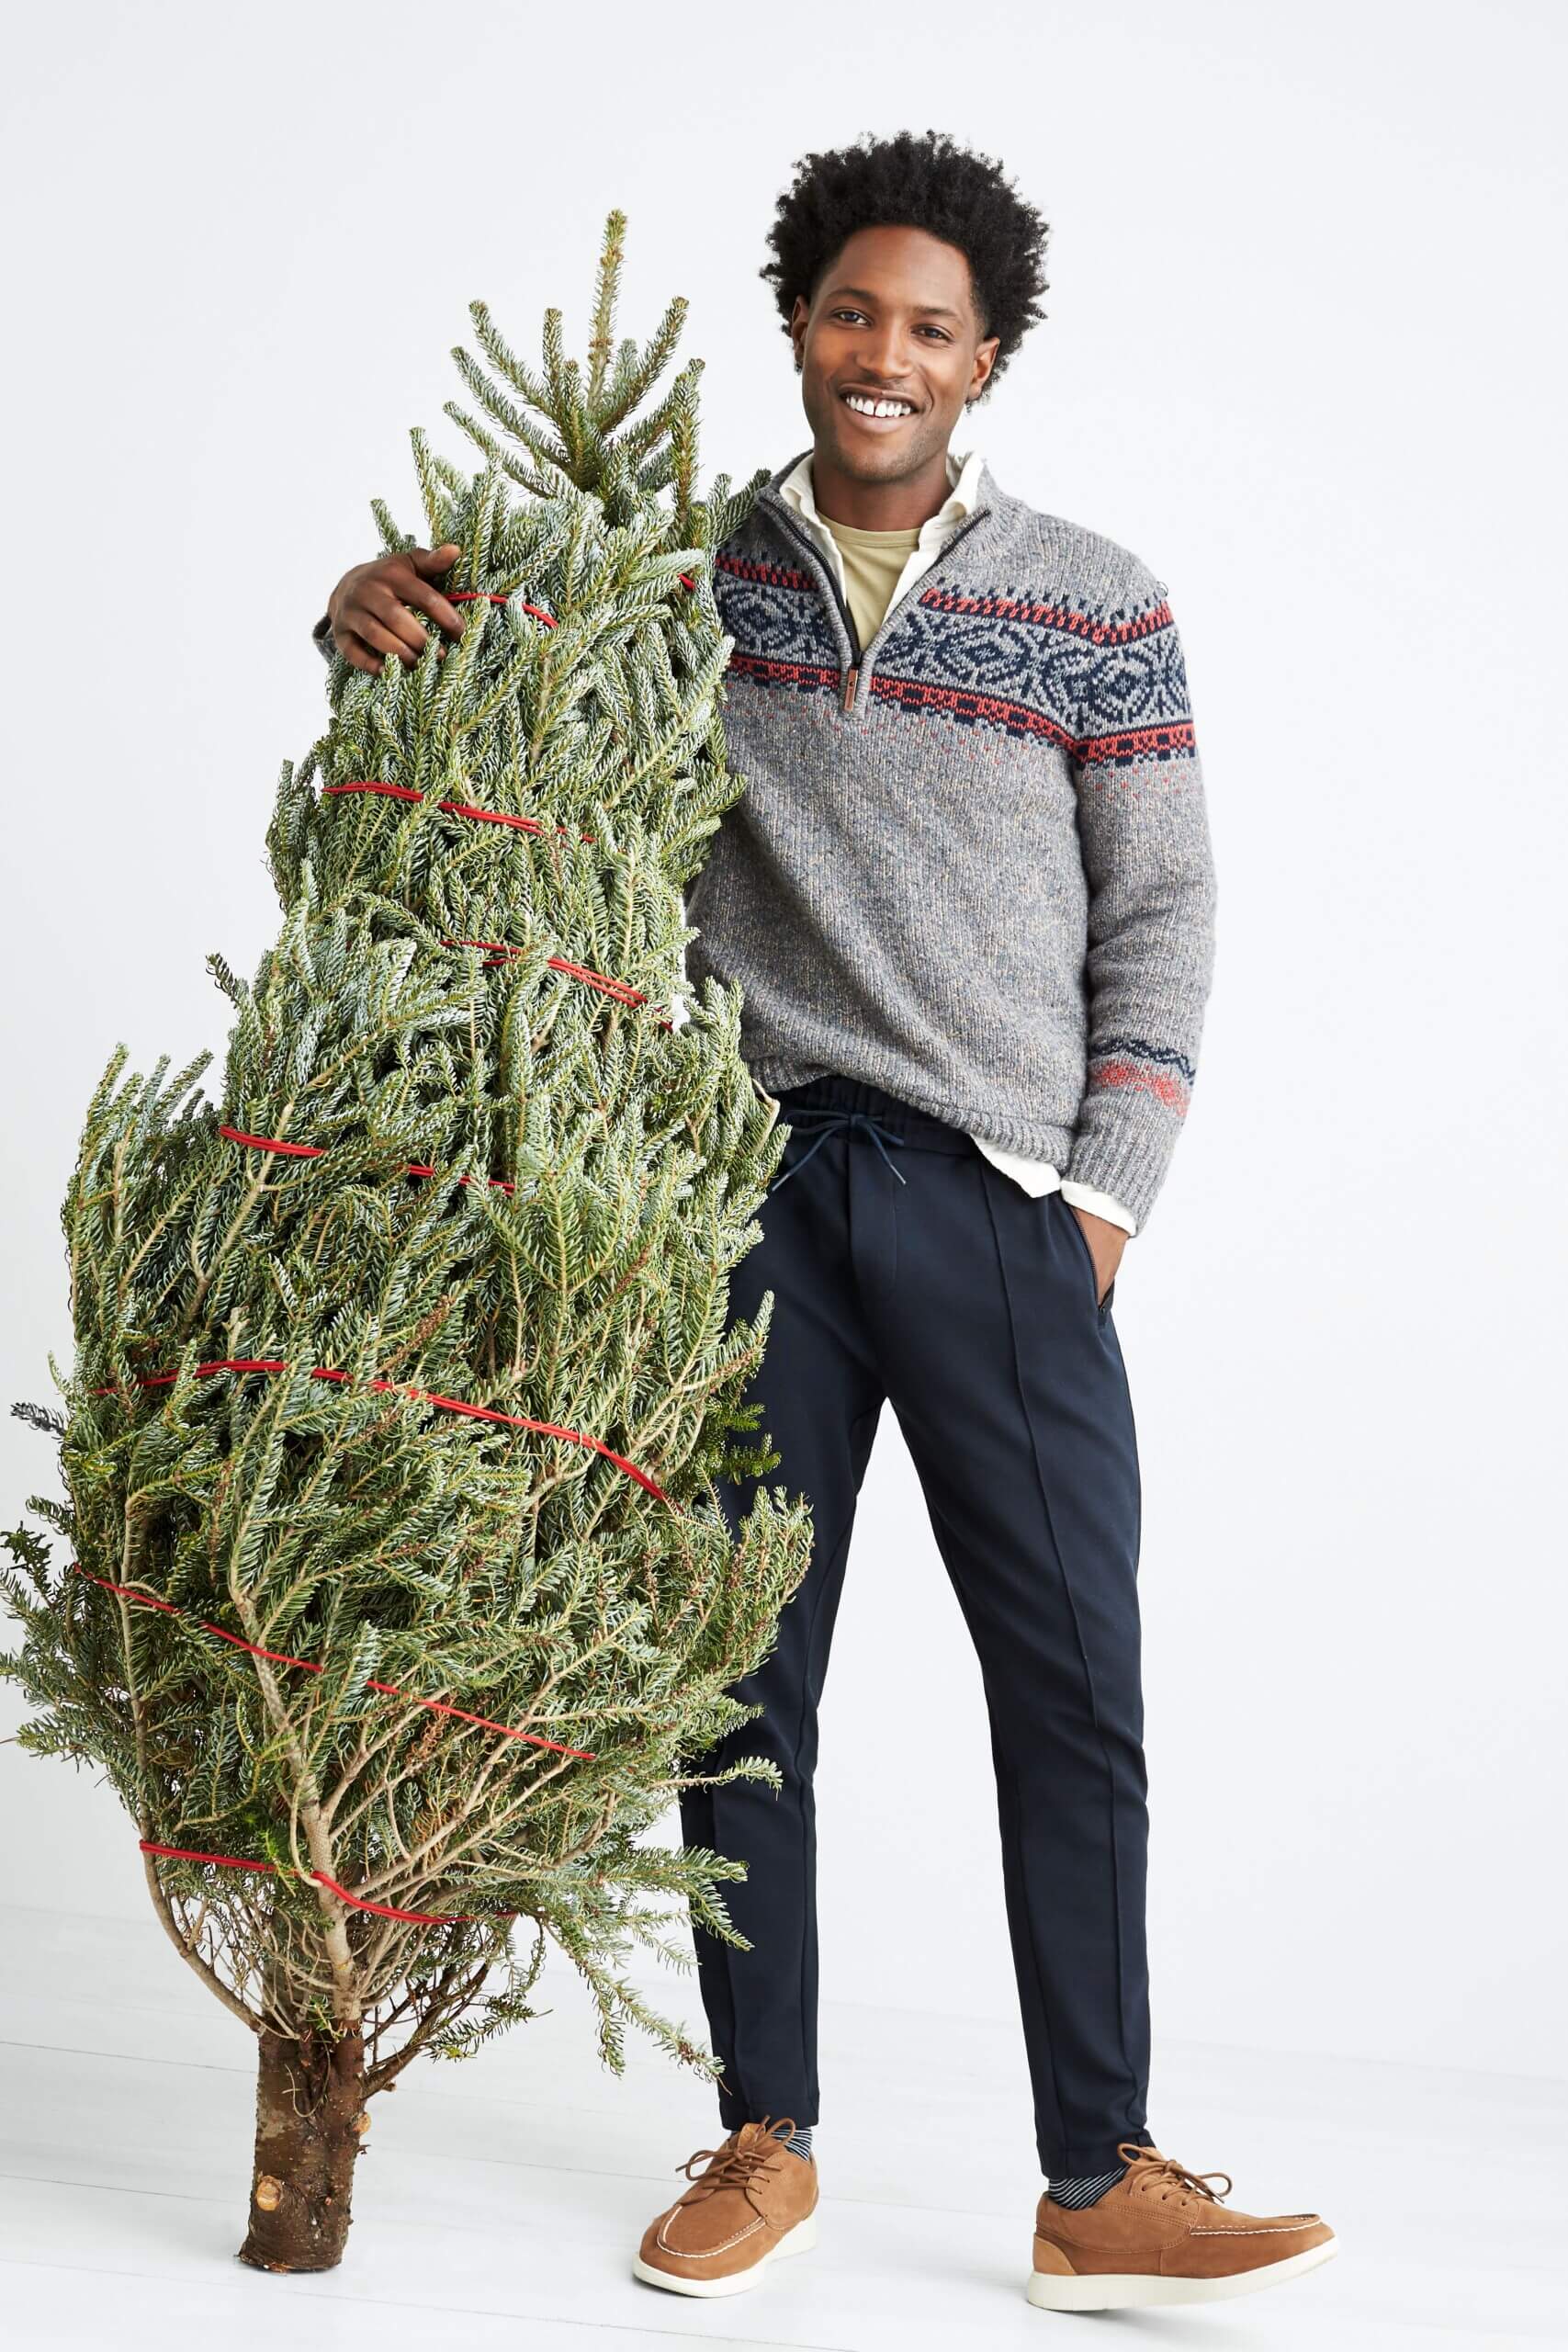 Designer Trousers for Men as Christmas Present